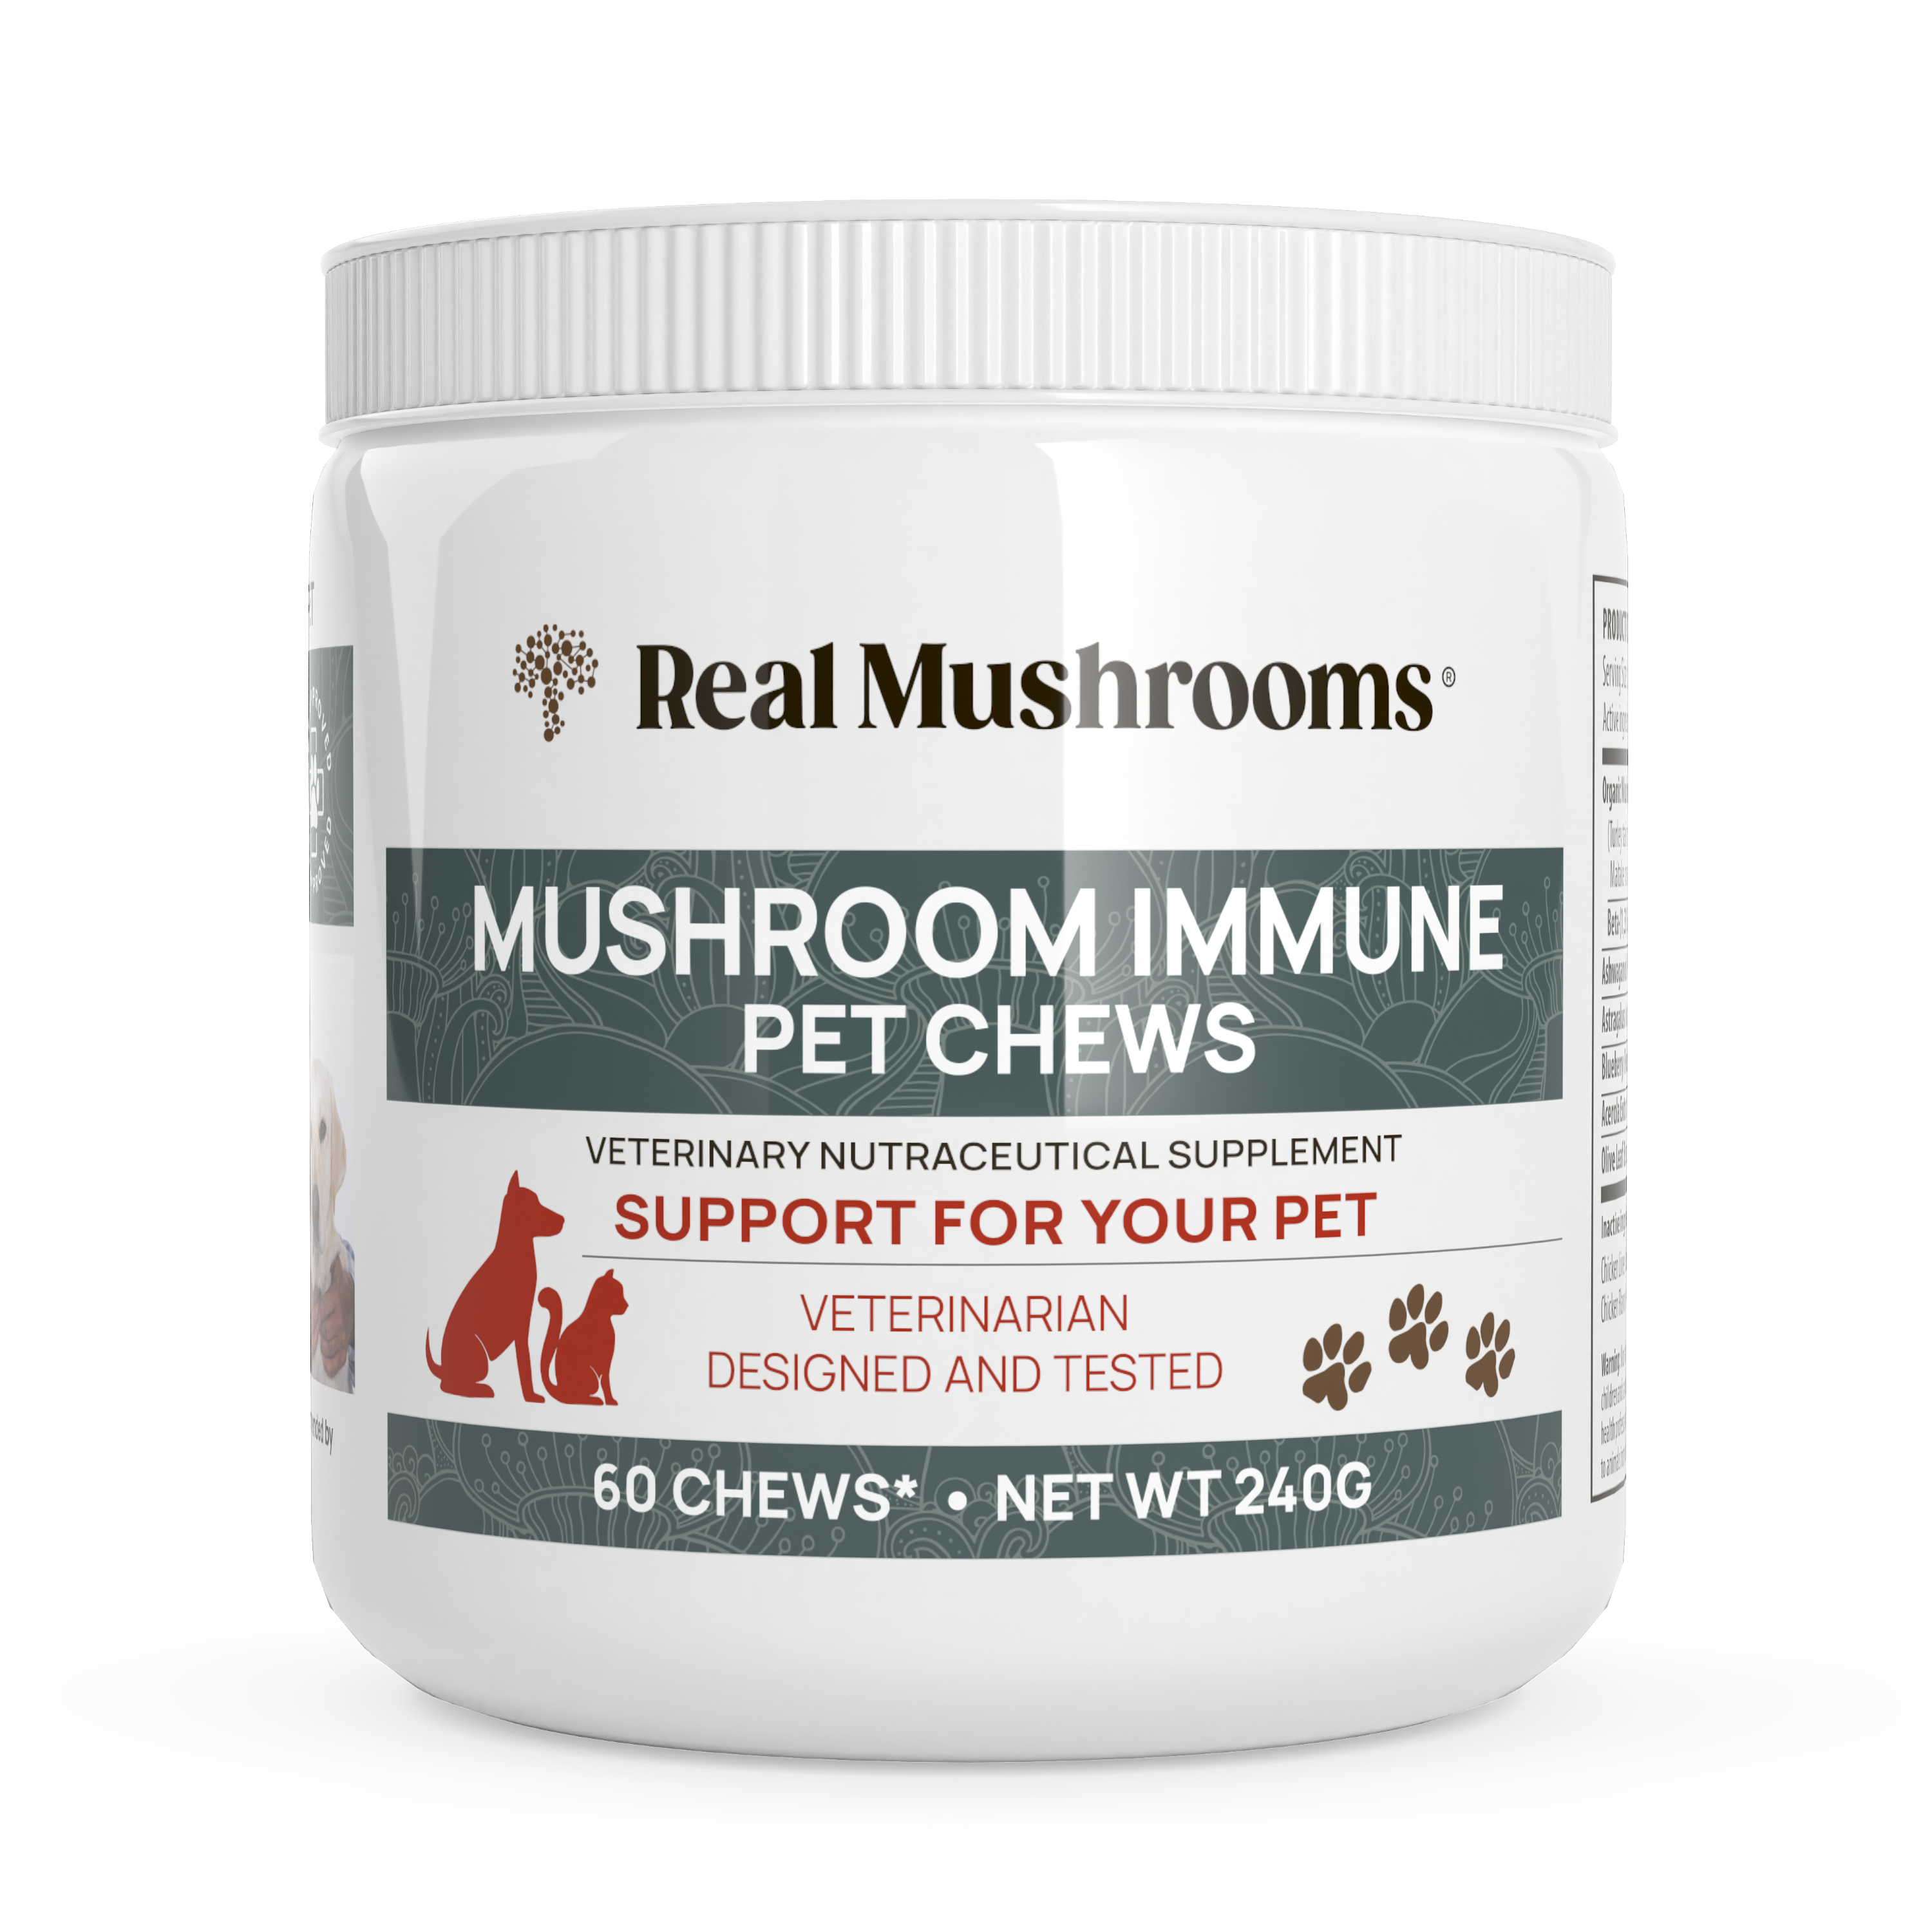 Mushroom Immune Pet Chews